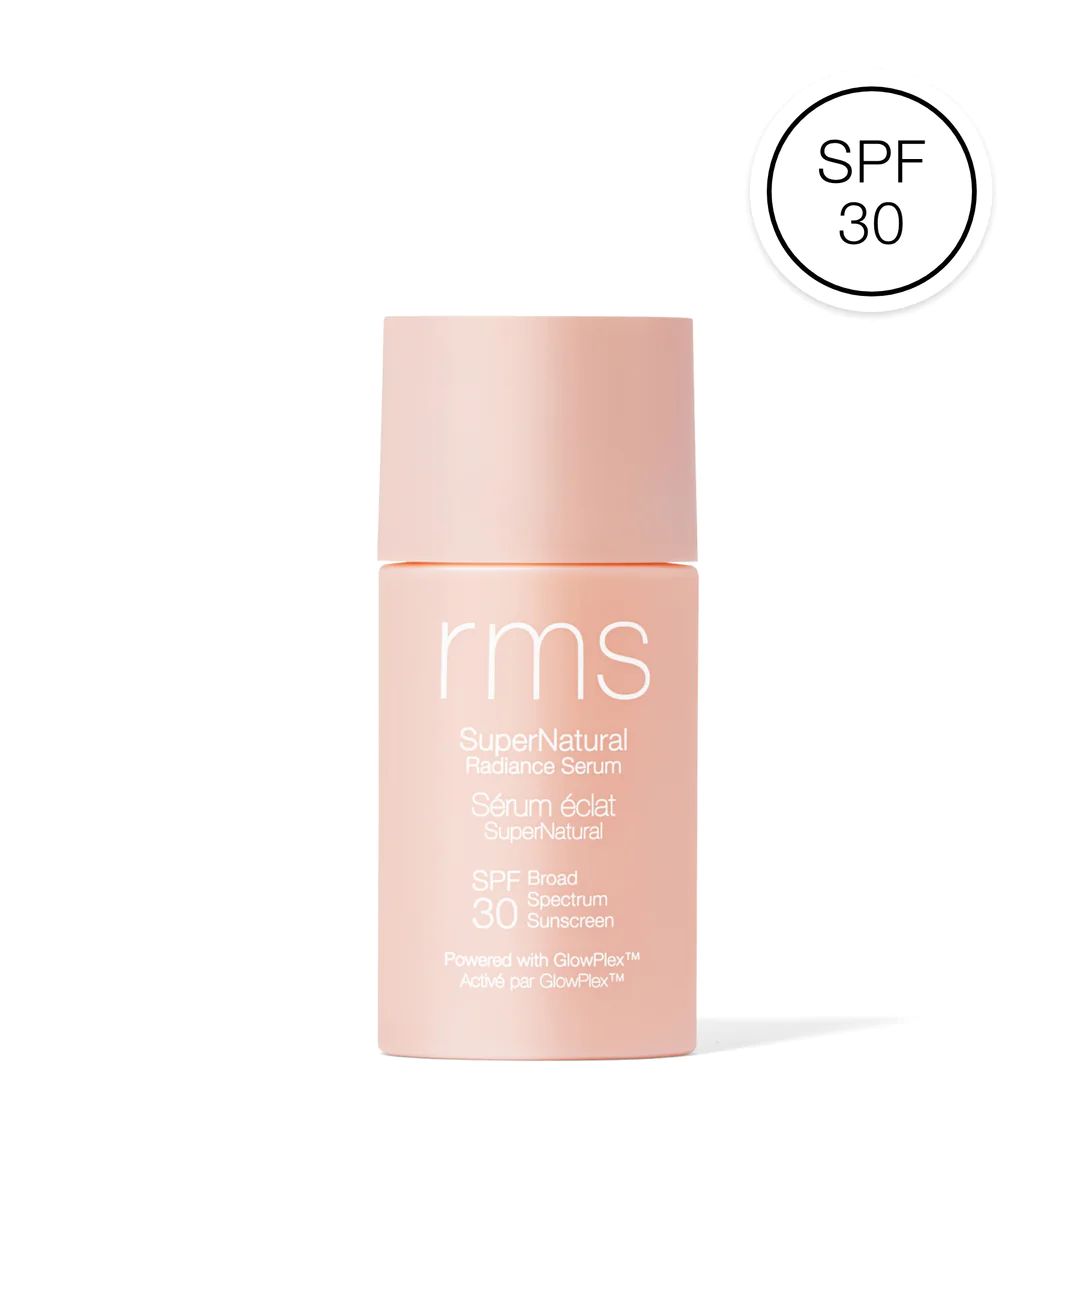 SuperNatural Radiance Serum Broad Spectrum SPF 30 Sunscreen | RMS Beauty